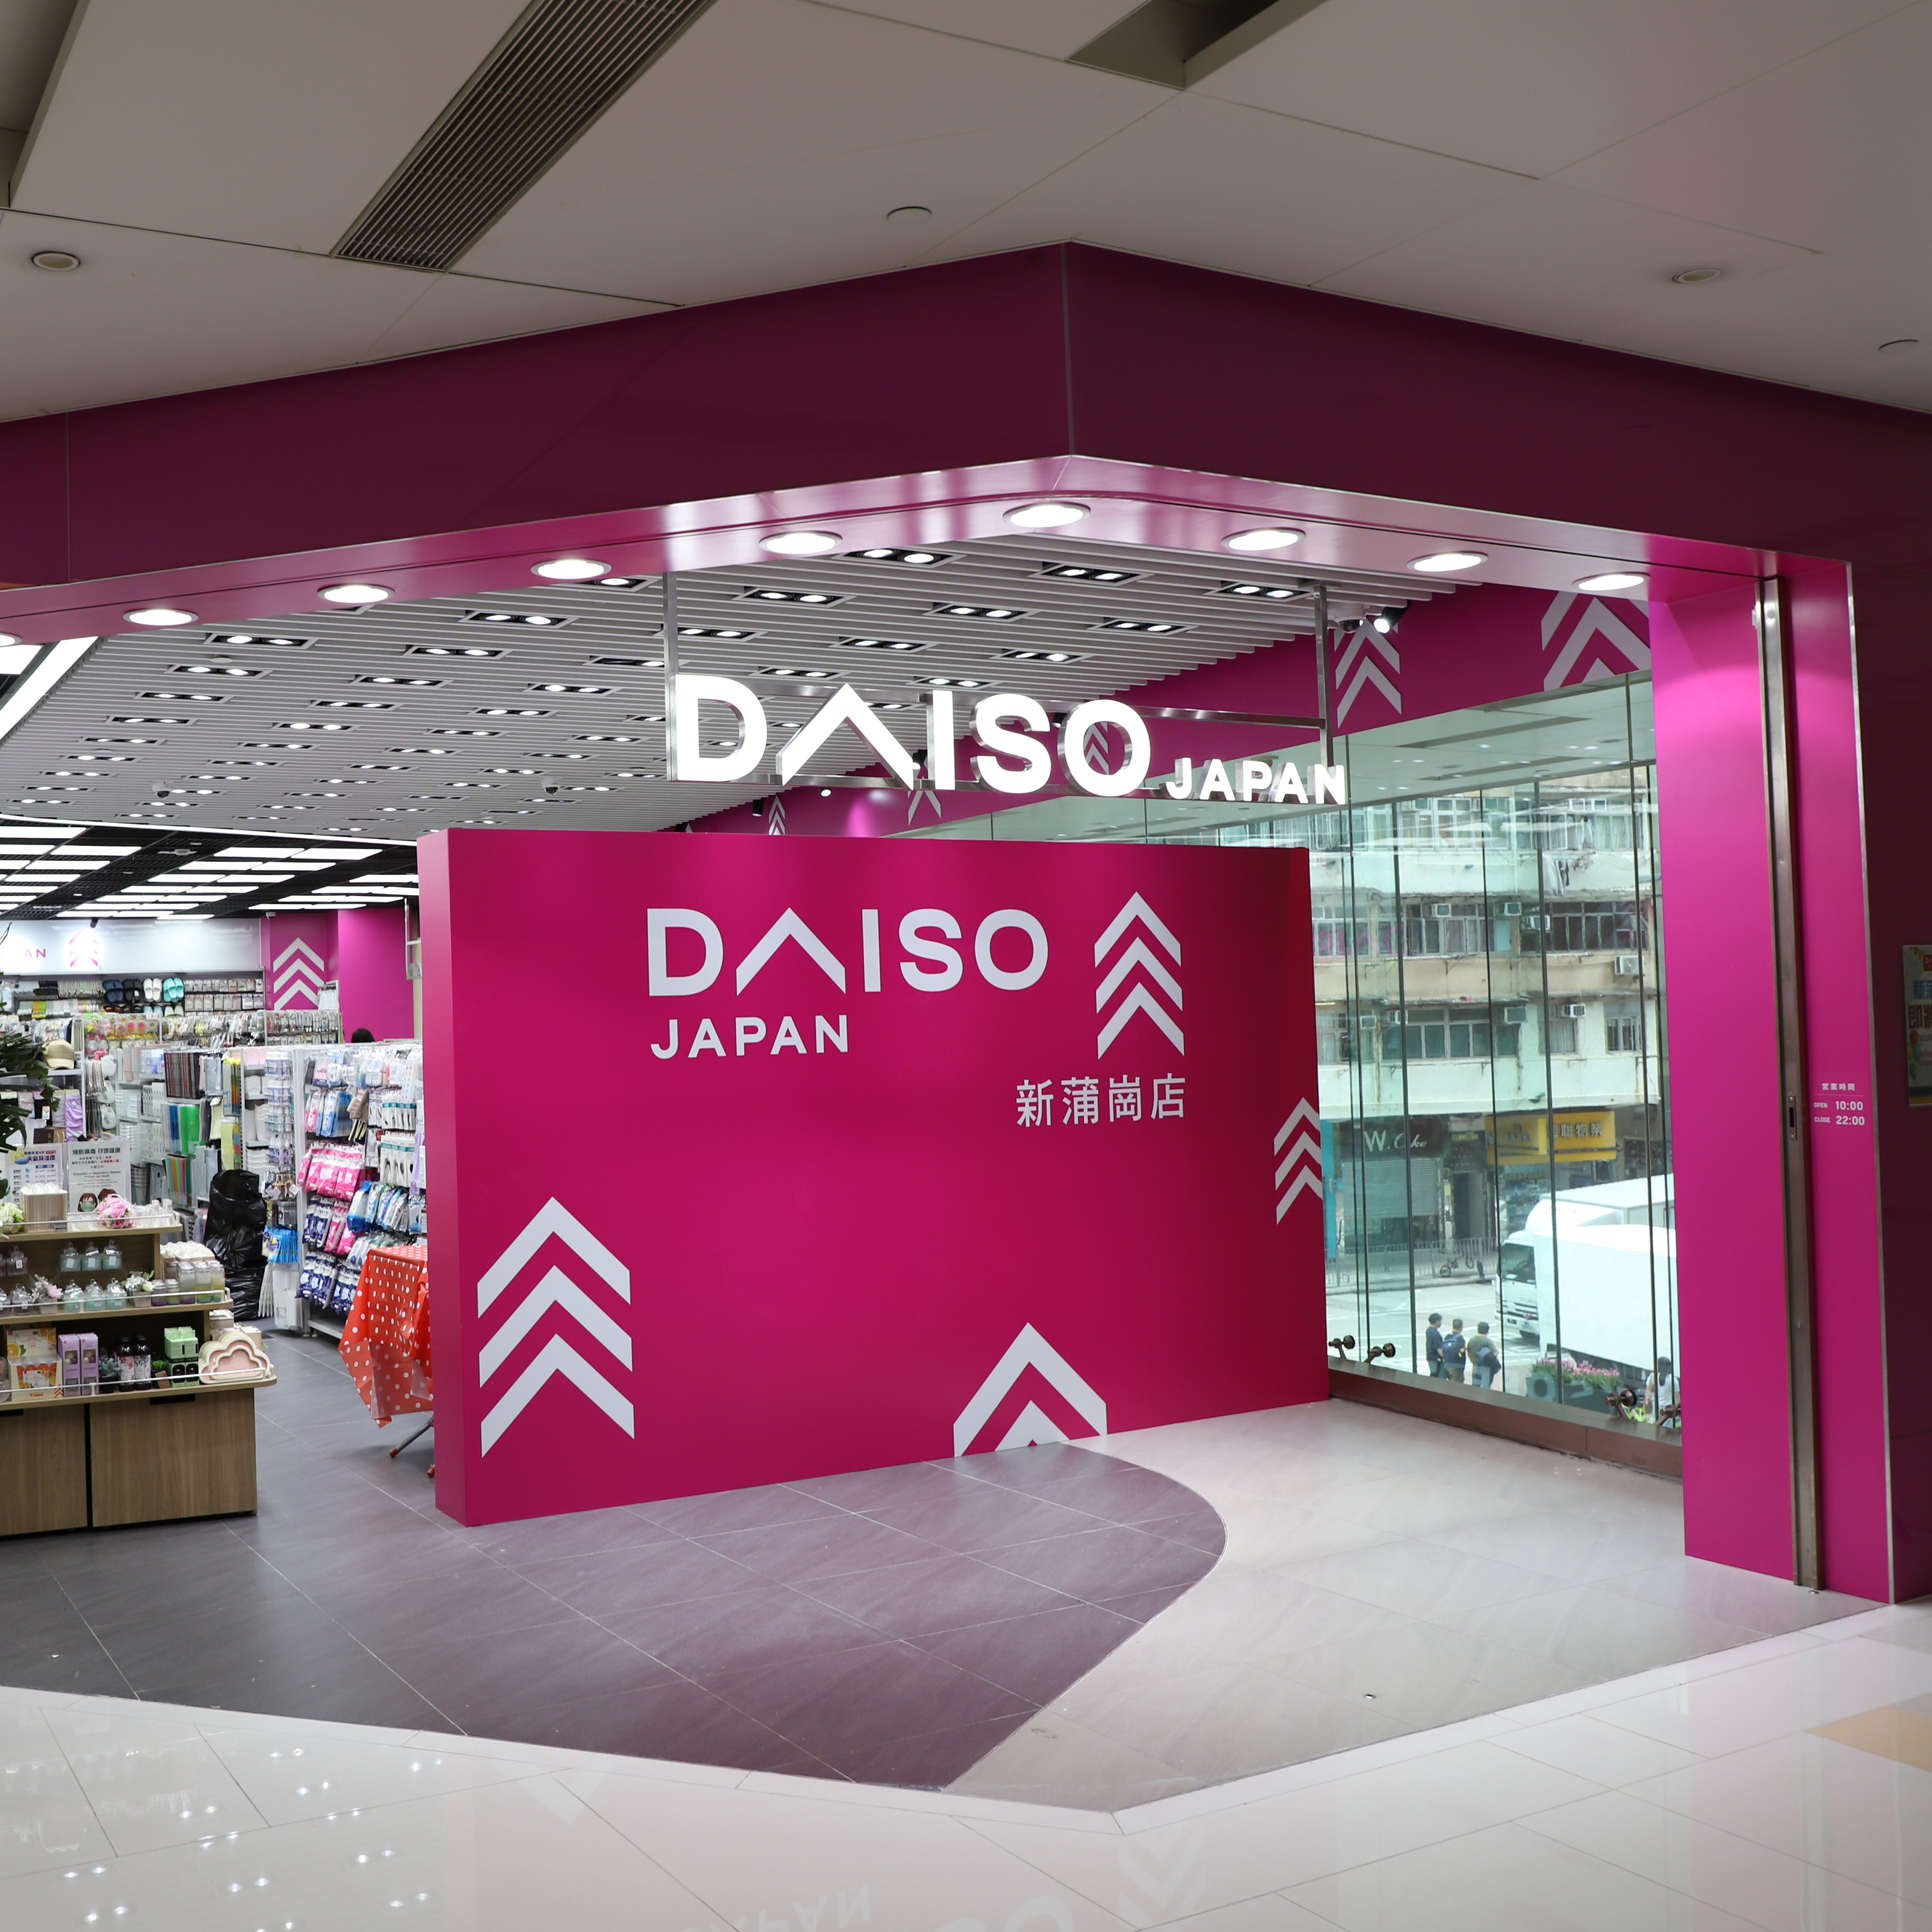 Daiso Japan 新蒲崗店